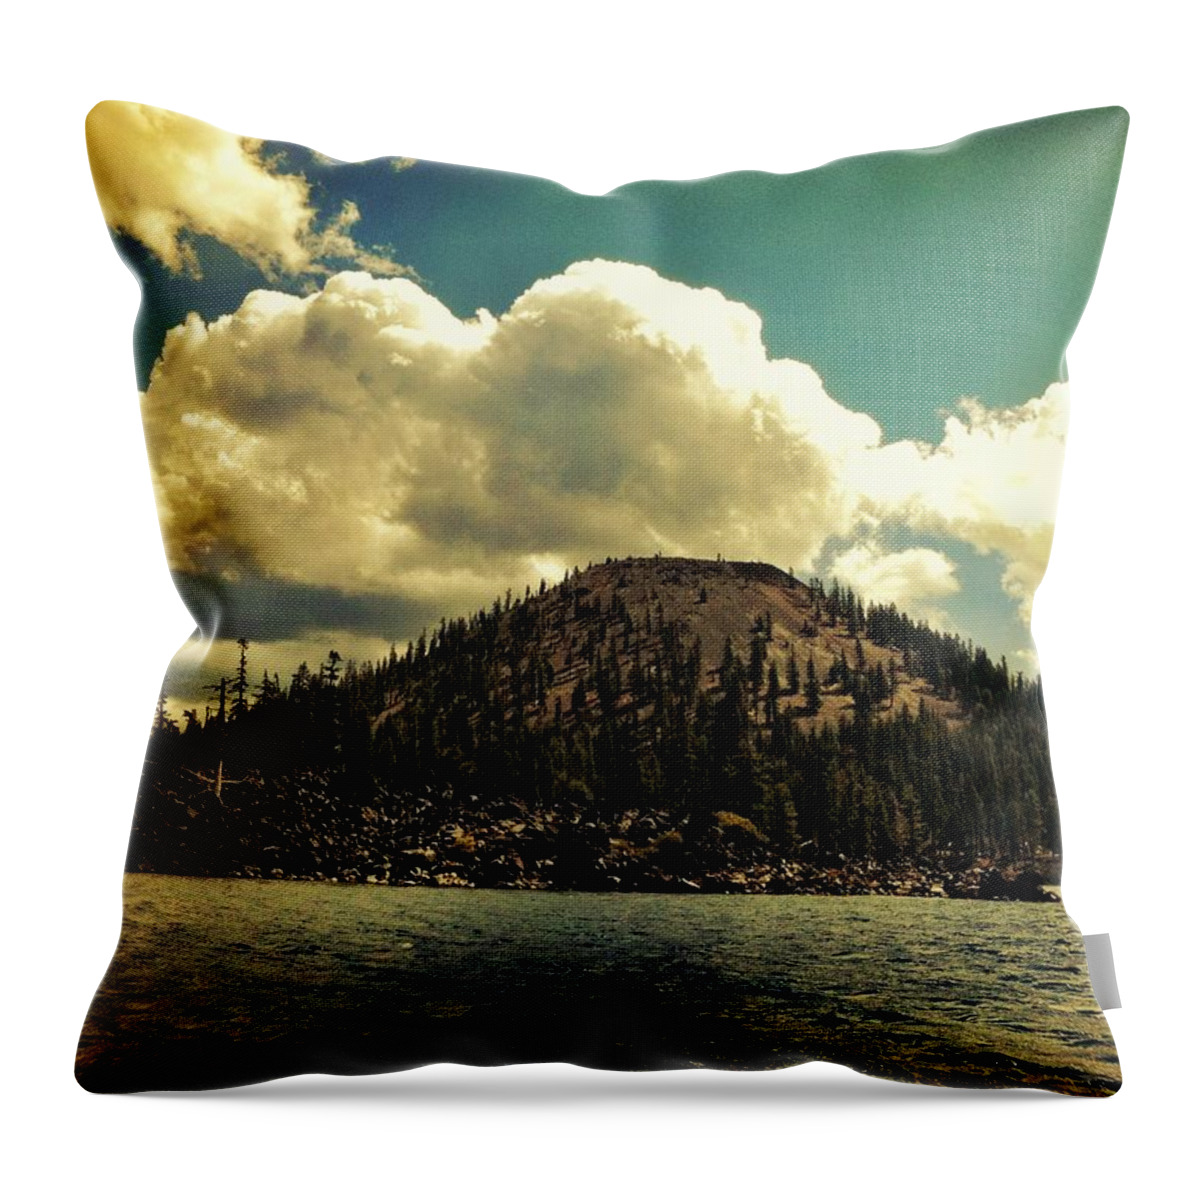 Wizard Island Throw Pillow featuring the photograph Gandalf by Chris Dunn